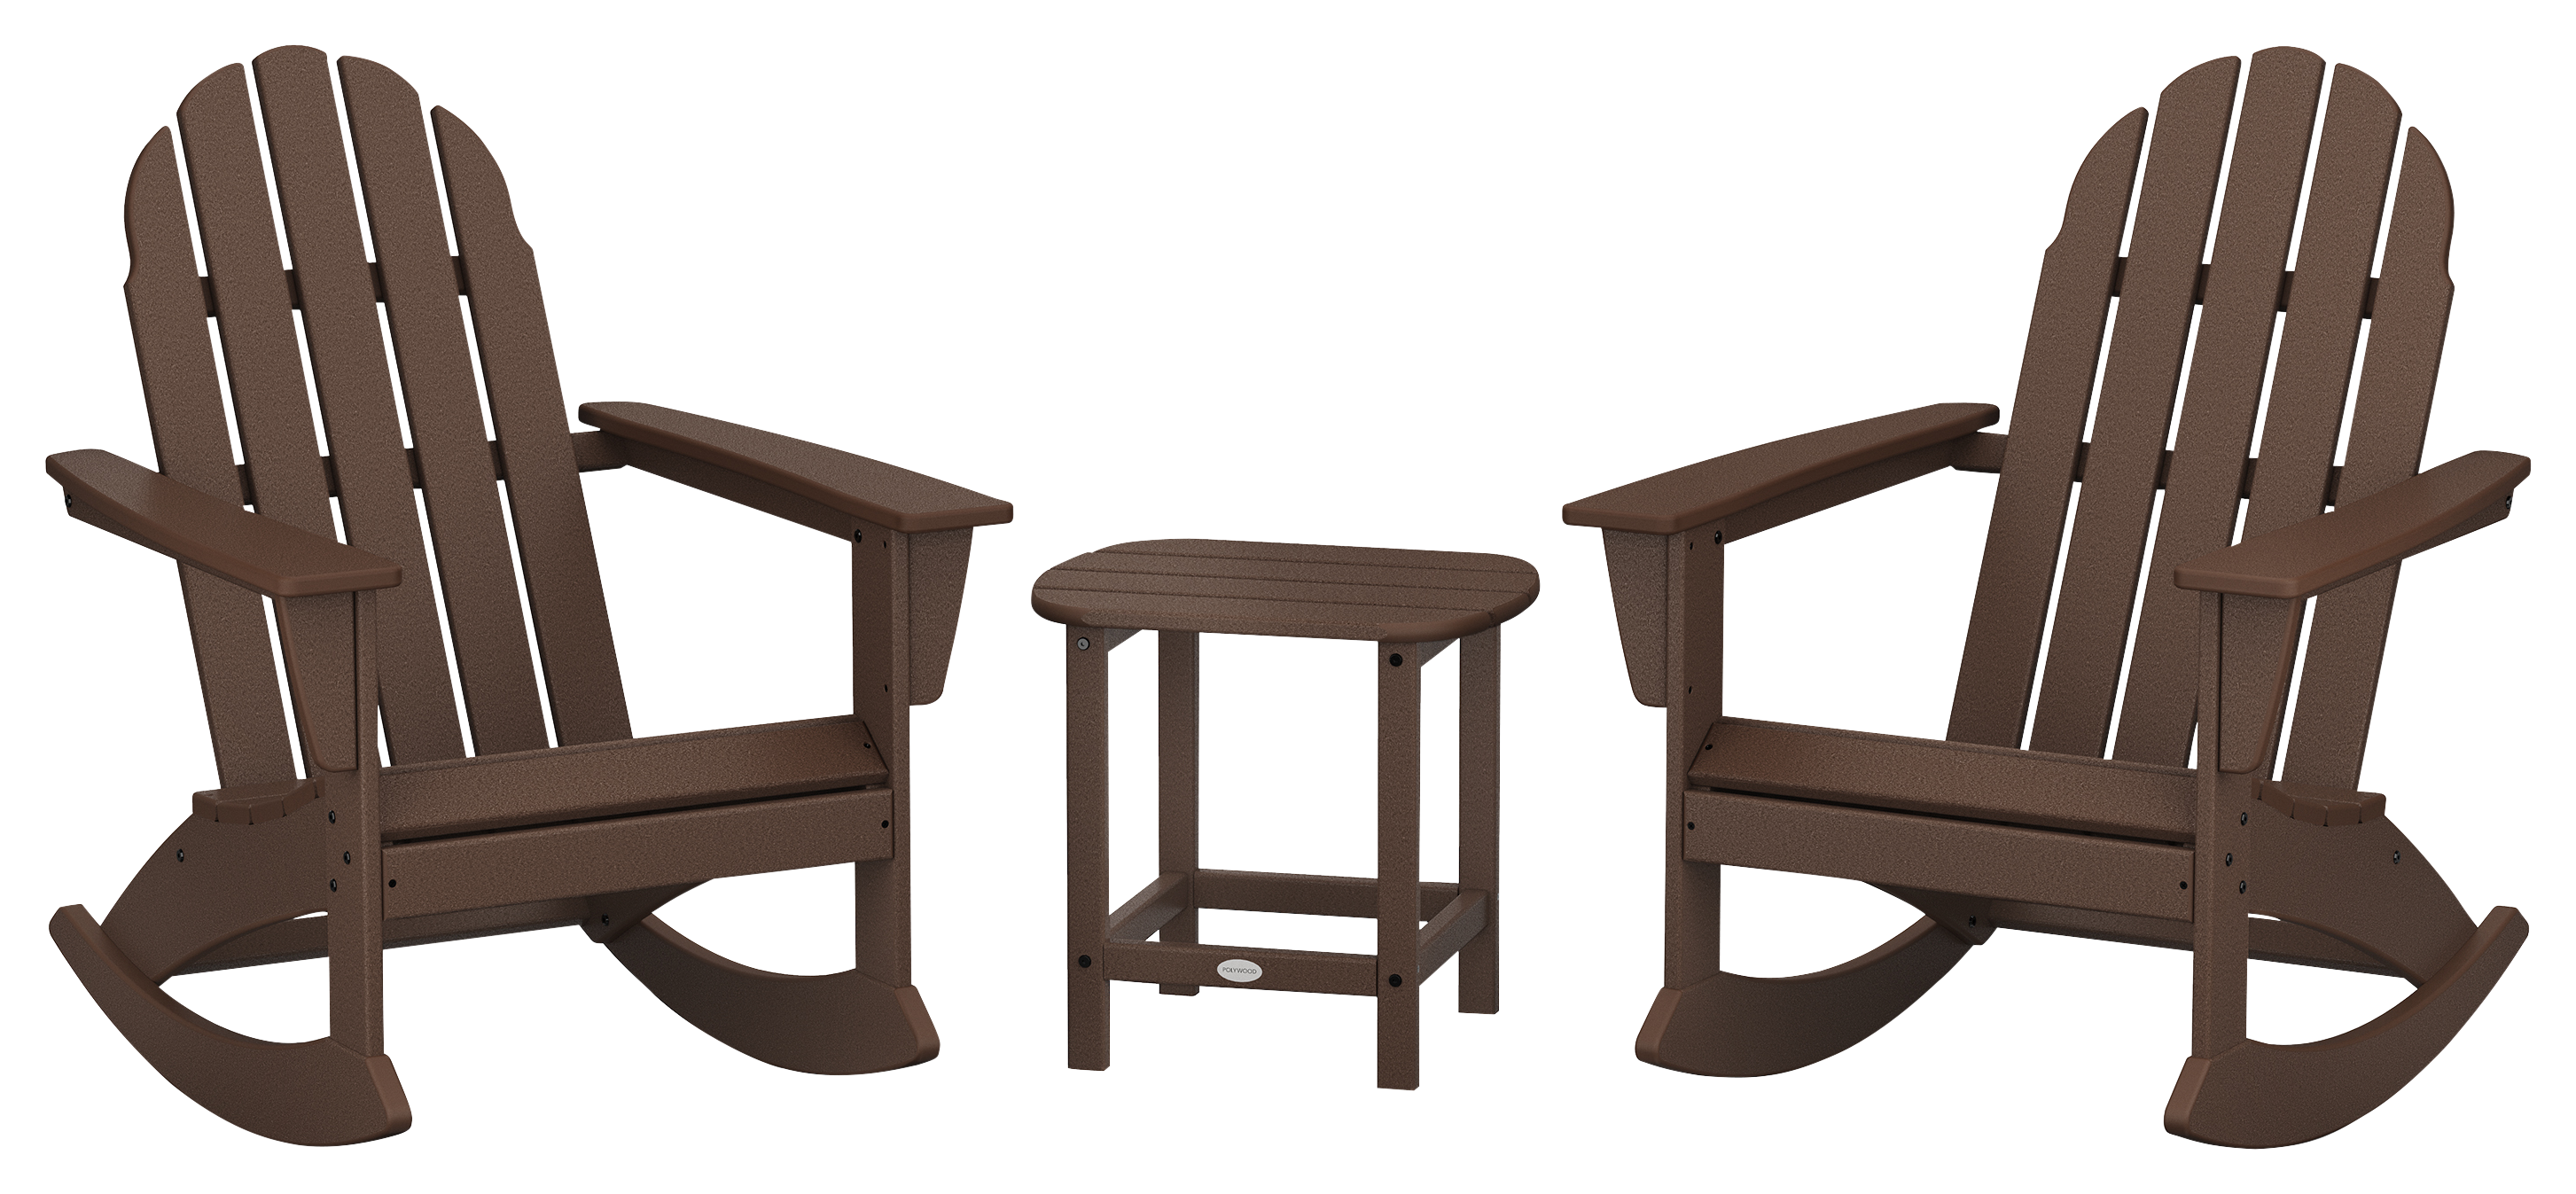 POLYWOOD Vineyard 3-Piece Adirondack Rocking Chair Set with South Beach Side Table - Mahogany